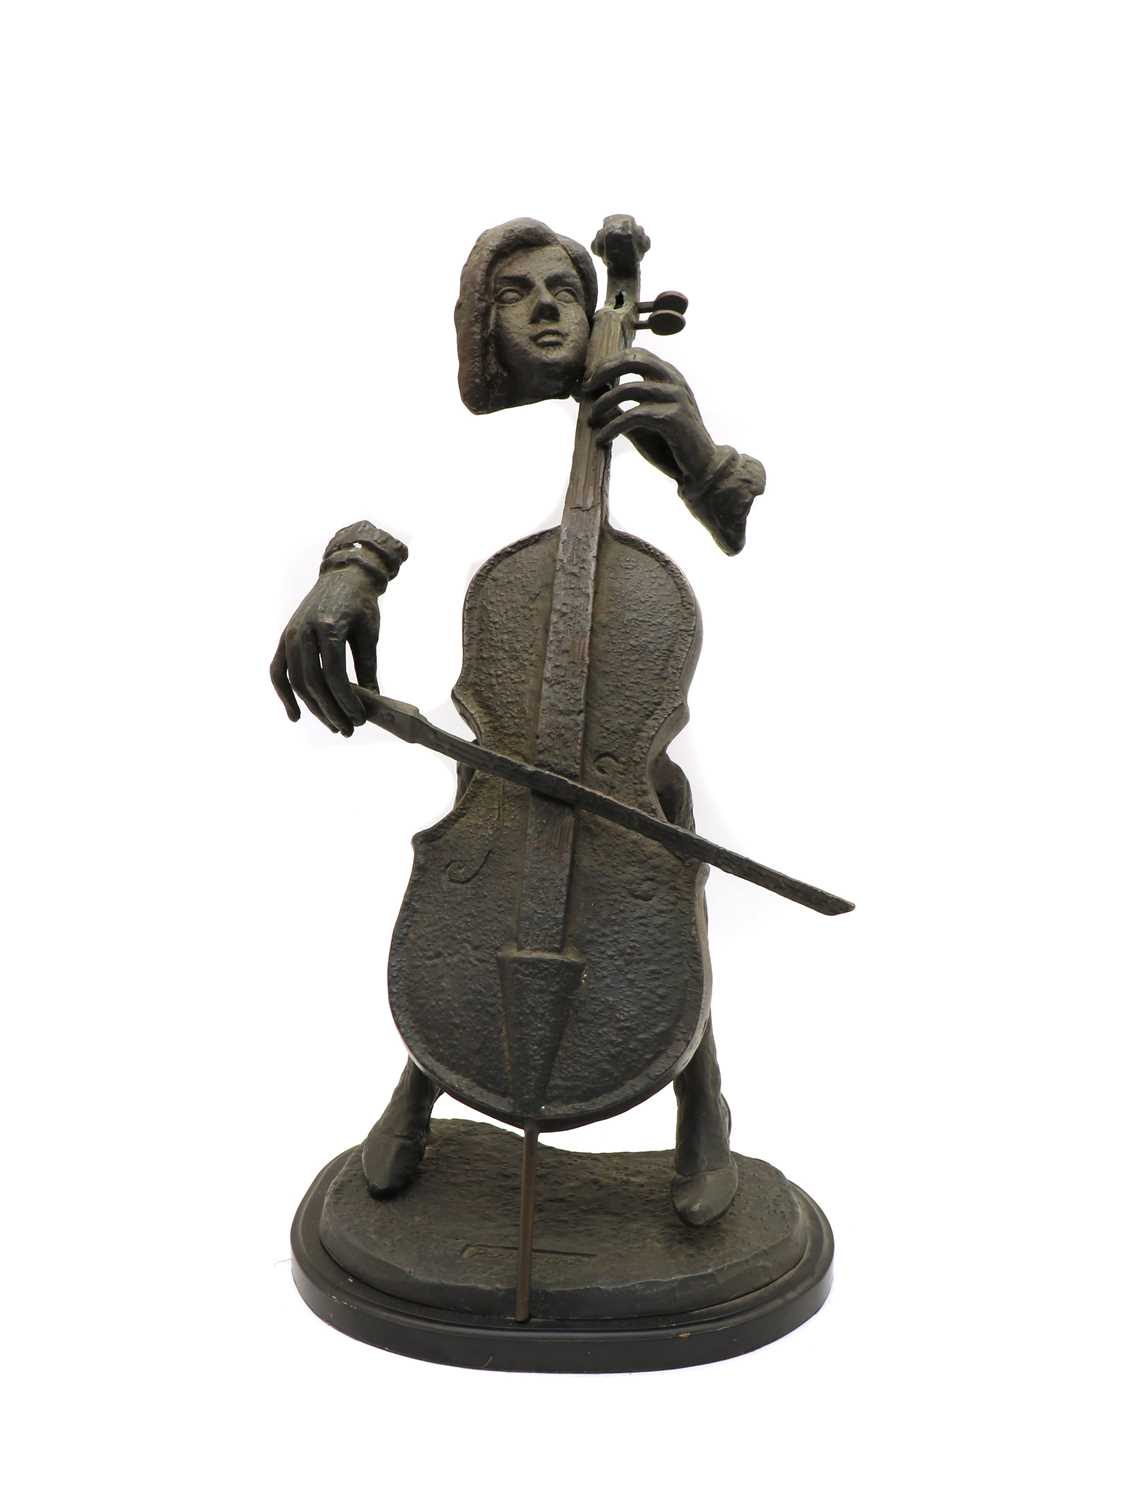 Lot 88 - A Pacific Art sculpture of a cellist